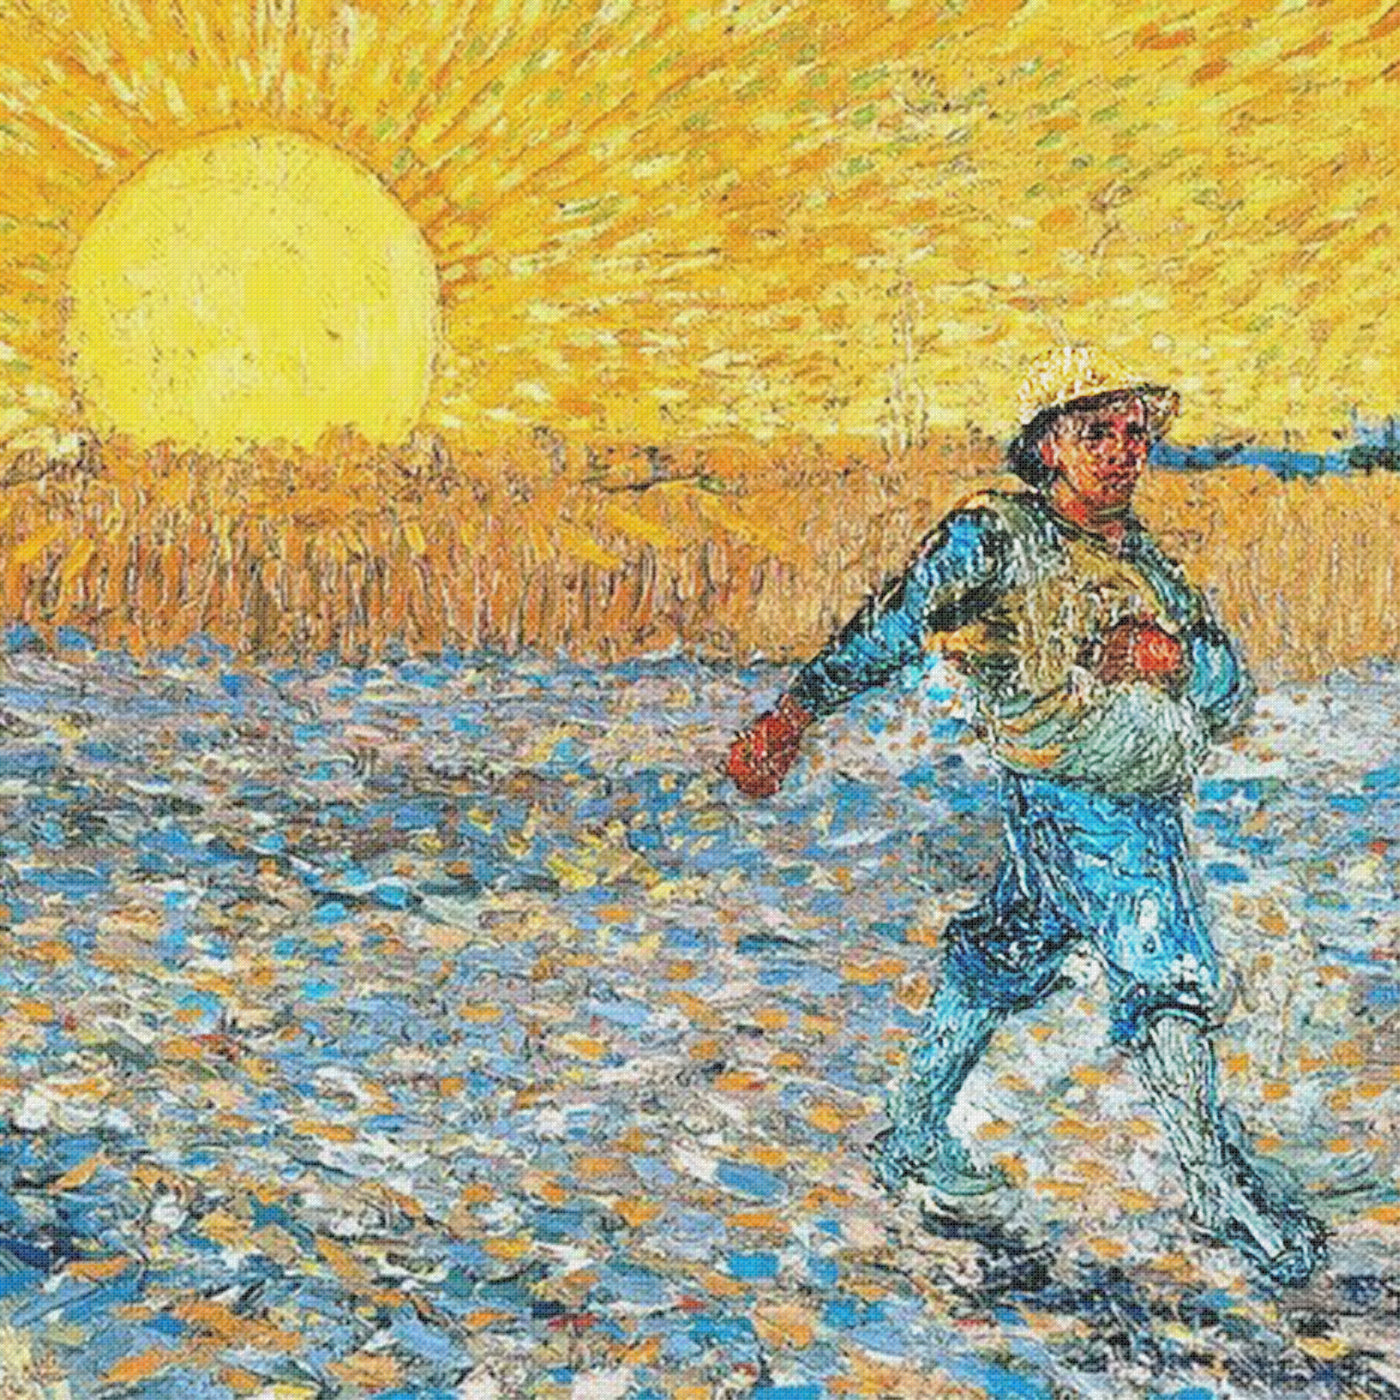 Originals Originals Vincent Van Gogh Seed Sowing Counted Cross 